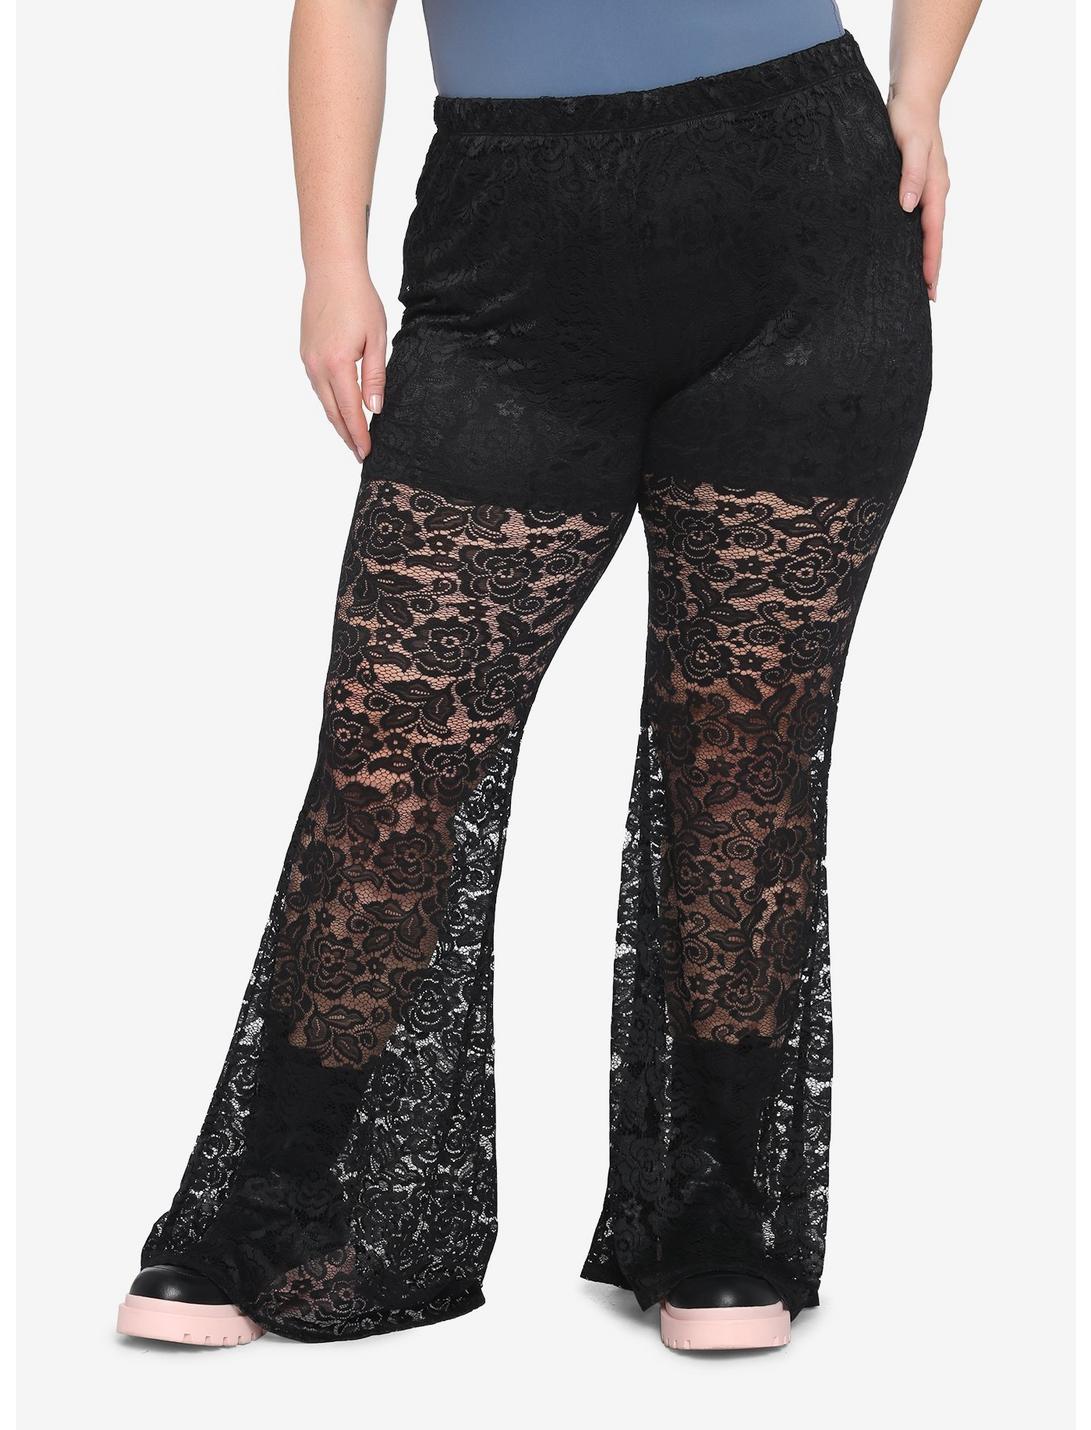 Black Sheer Lace Flare Leggings Plus Size, BLACK, hi-res